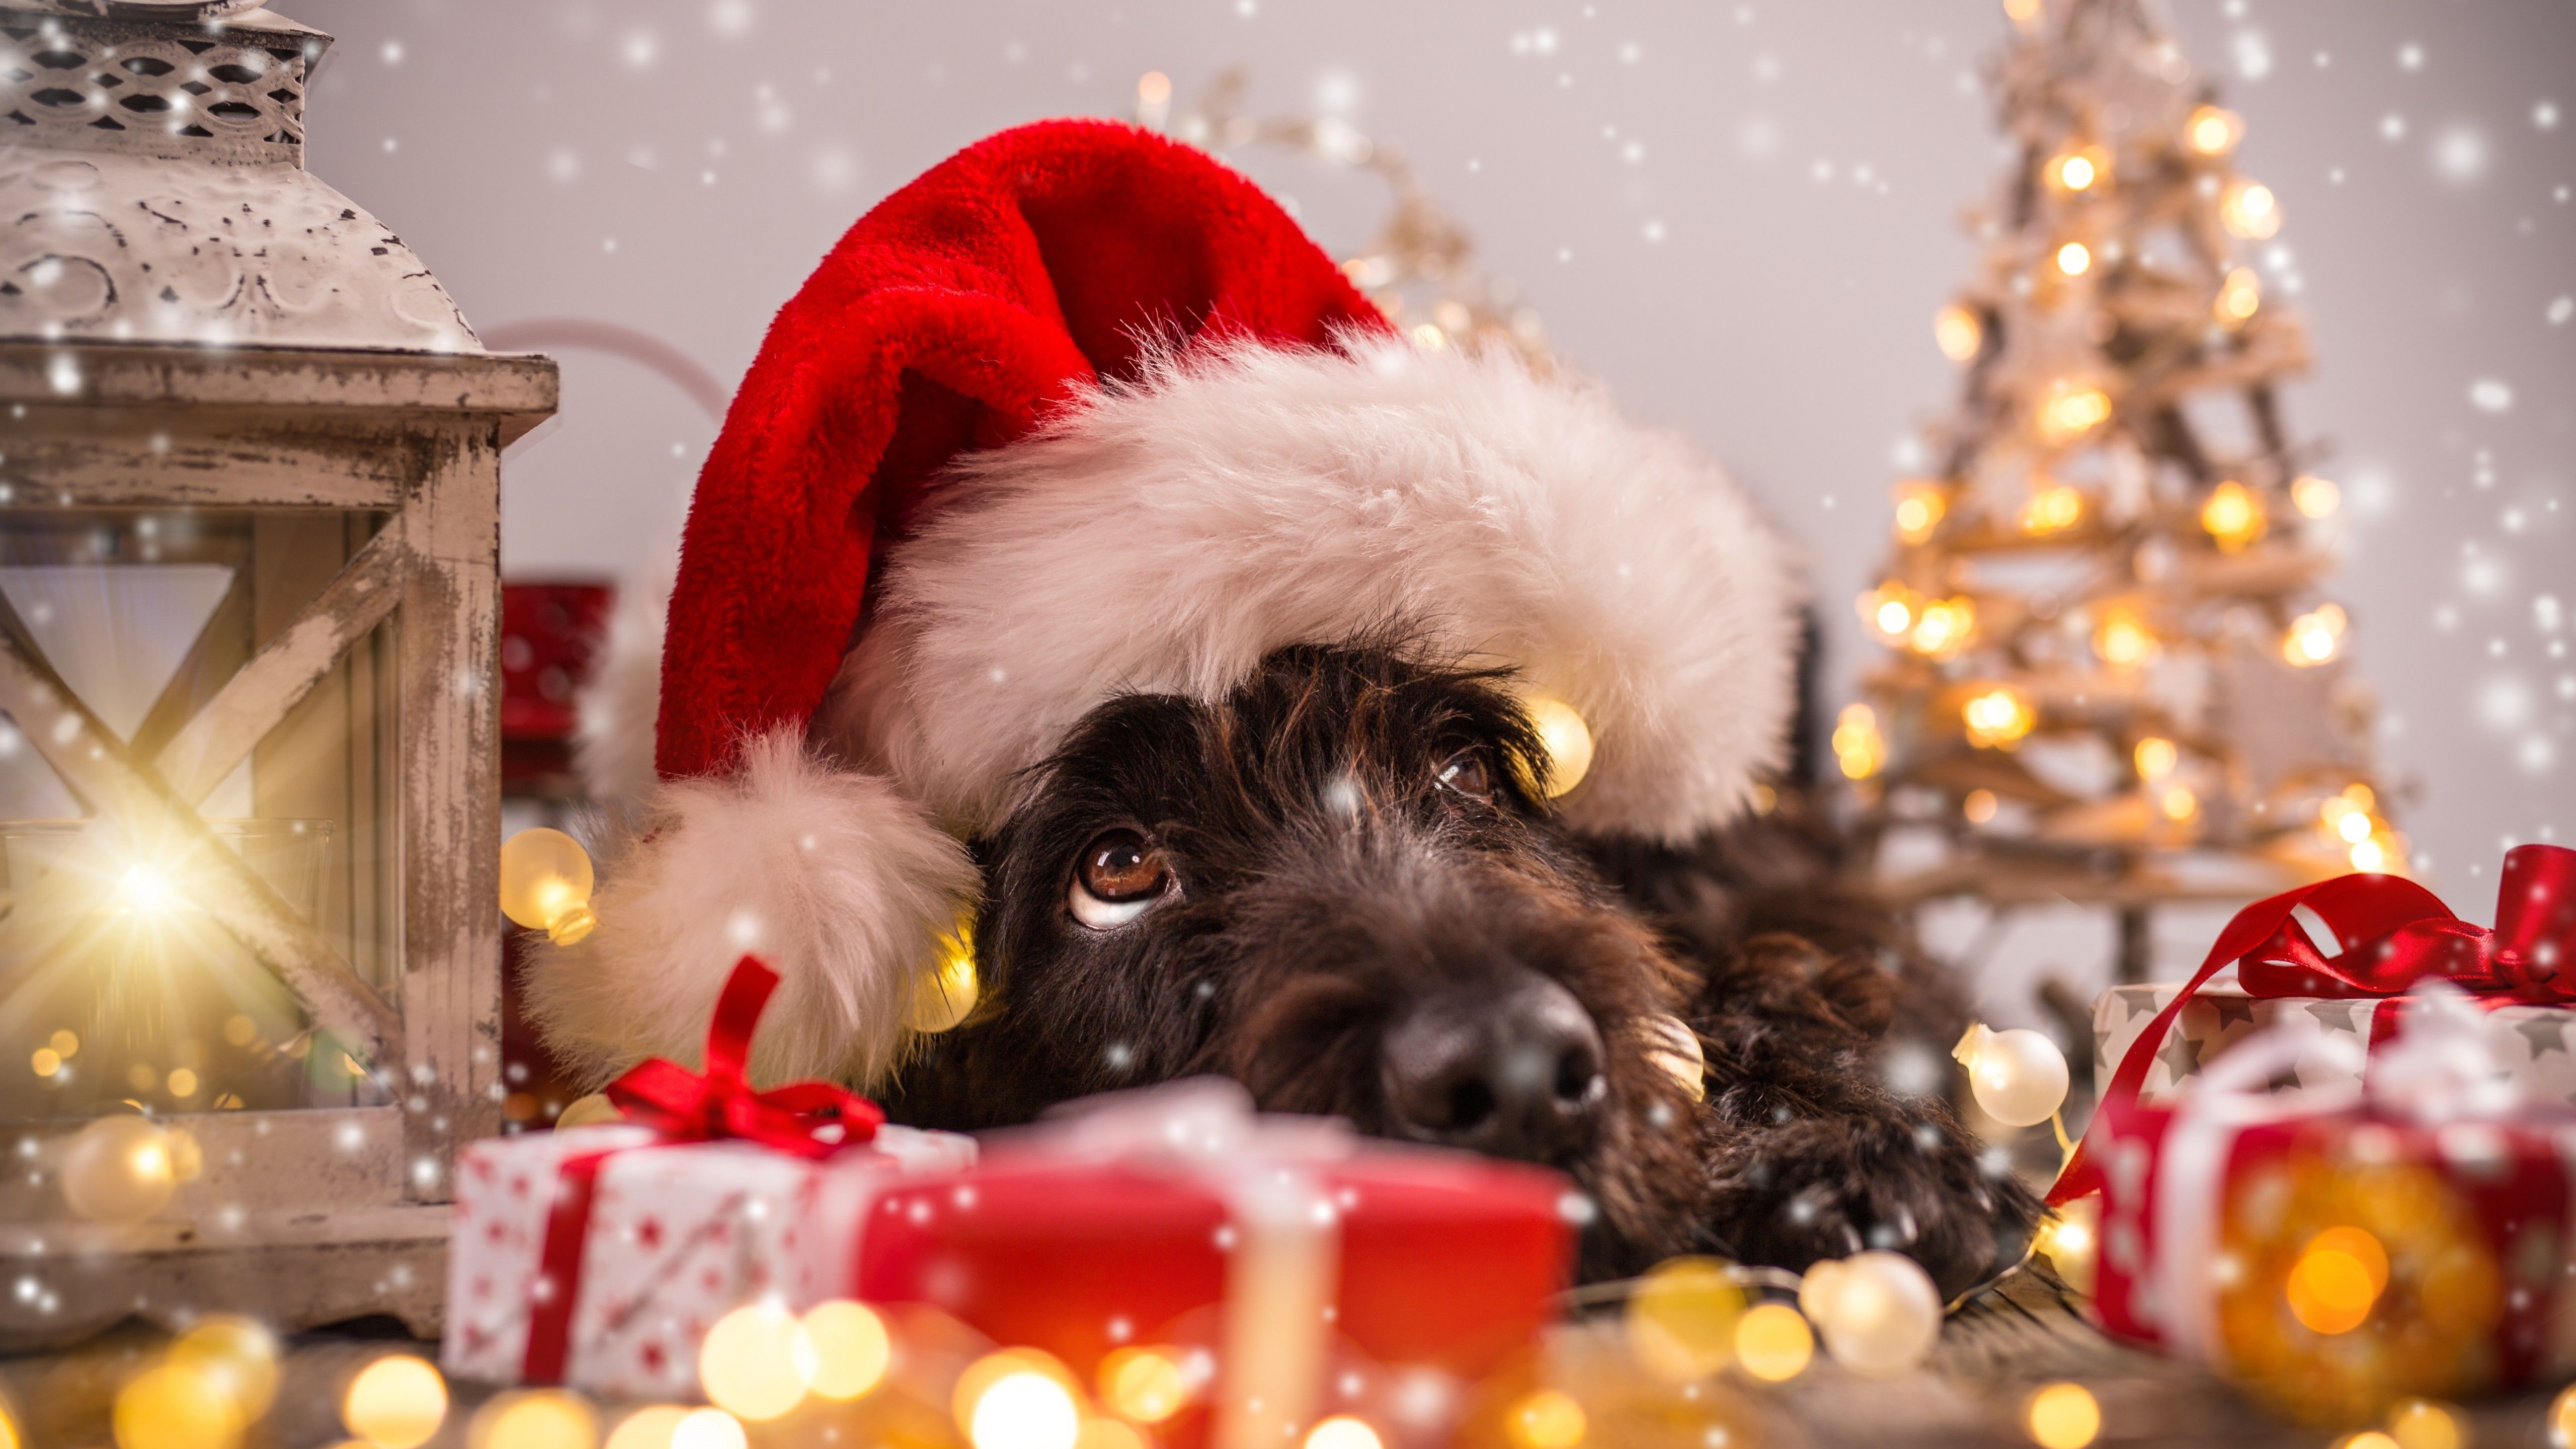 Wallpaper Christmas, New Year, snow, dog, cute animals, 4k, Holidays